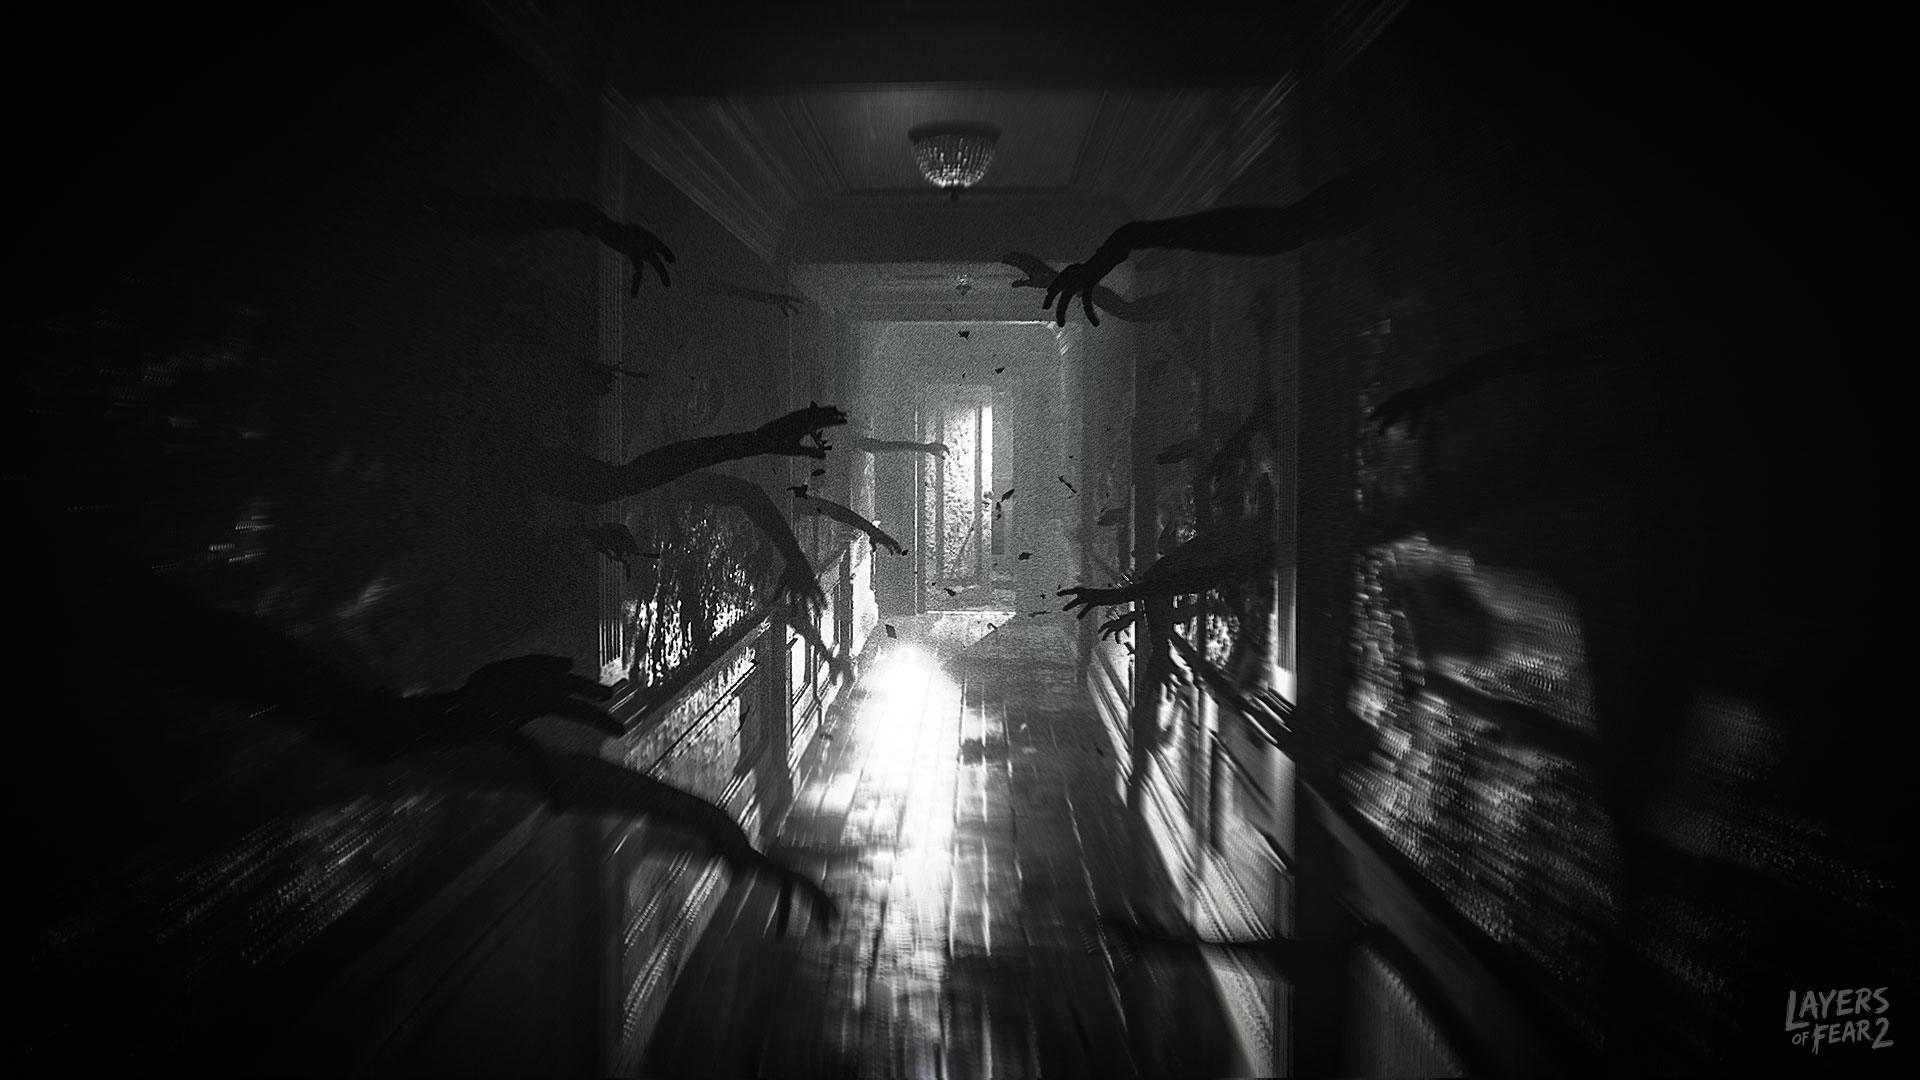 Layers of Fear 2 - screenshot 12